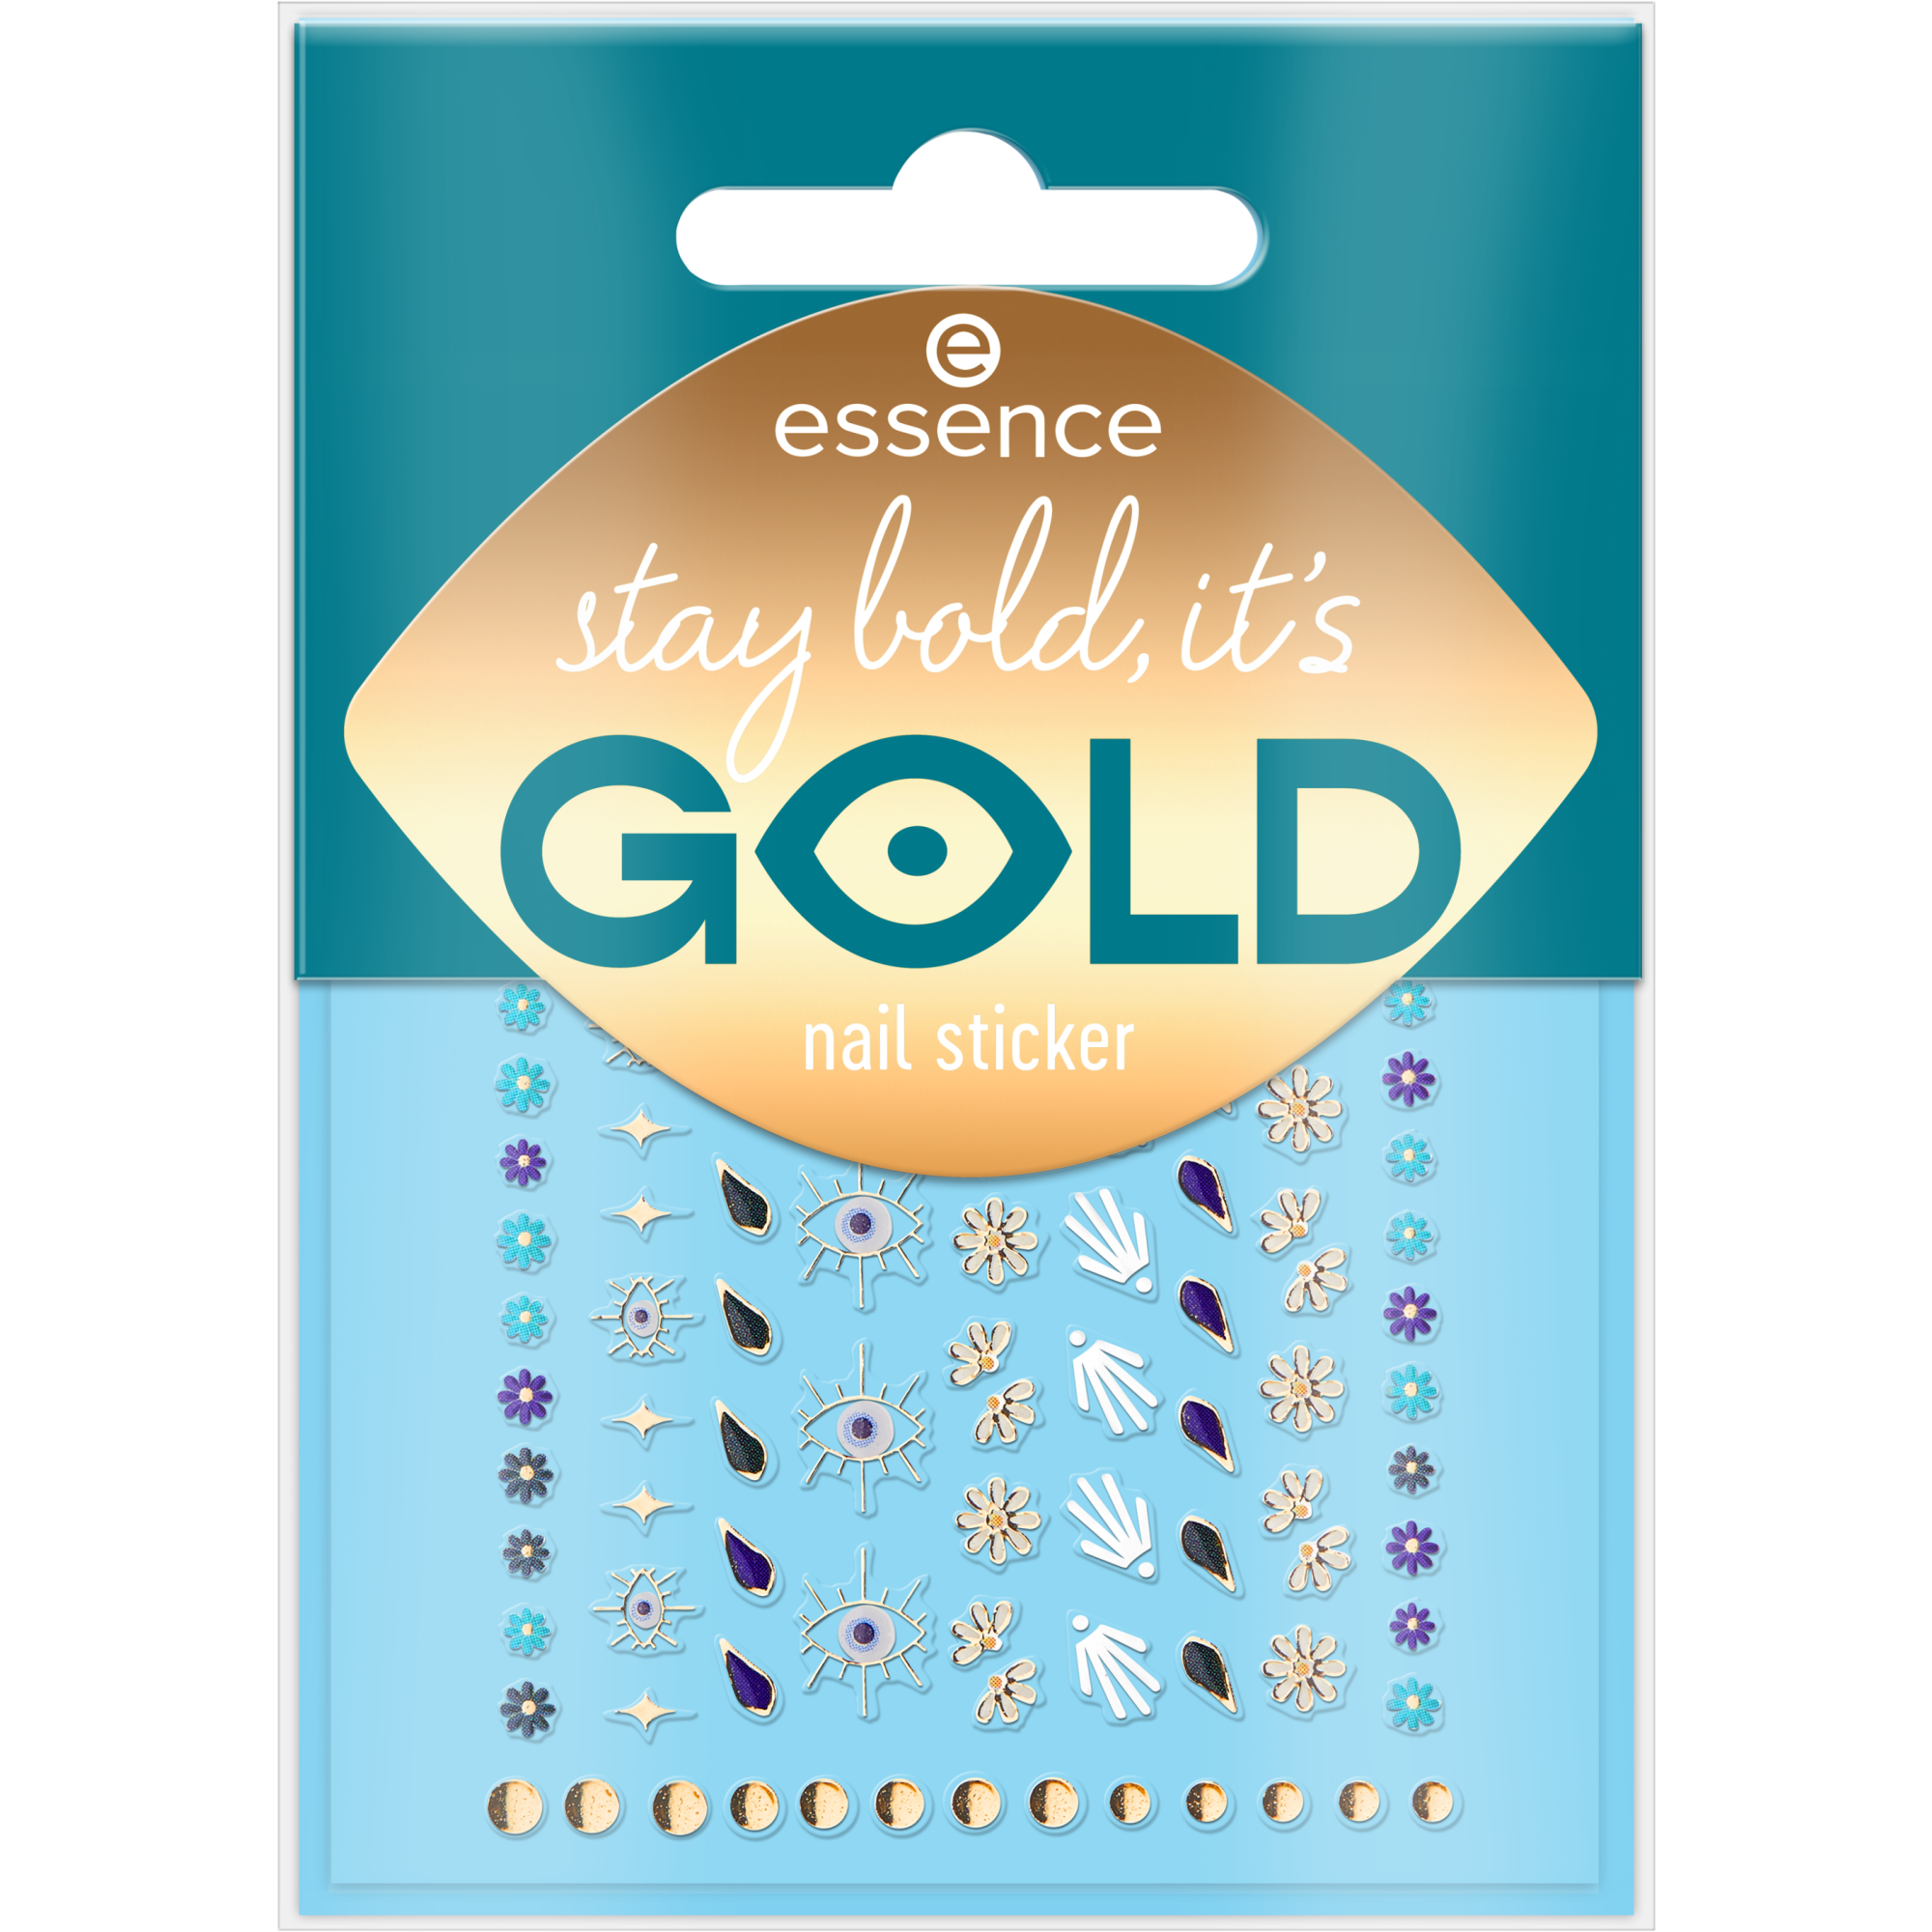 stay bold, it's GOLD nail sticker